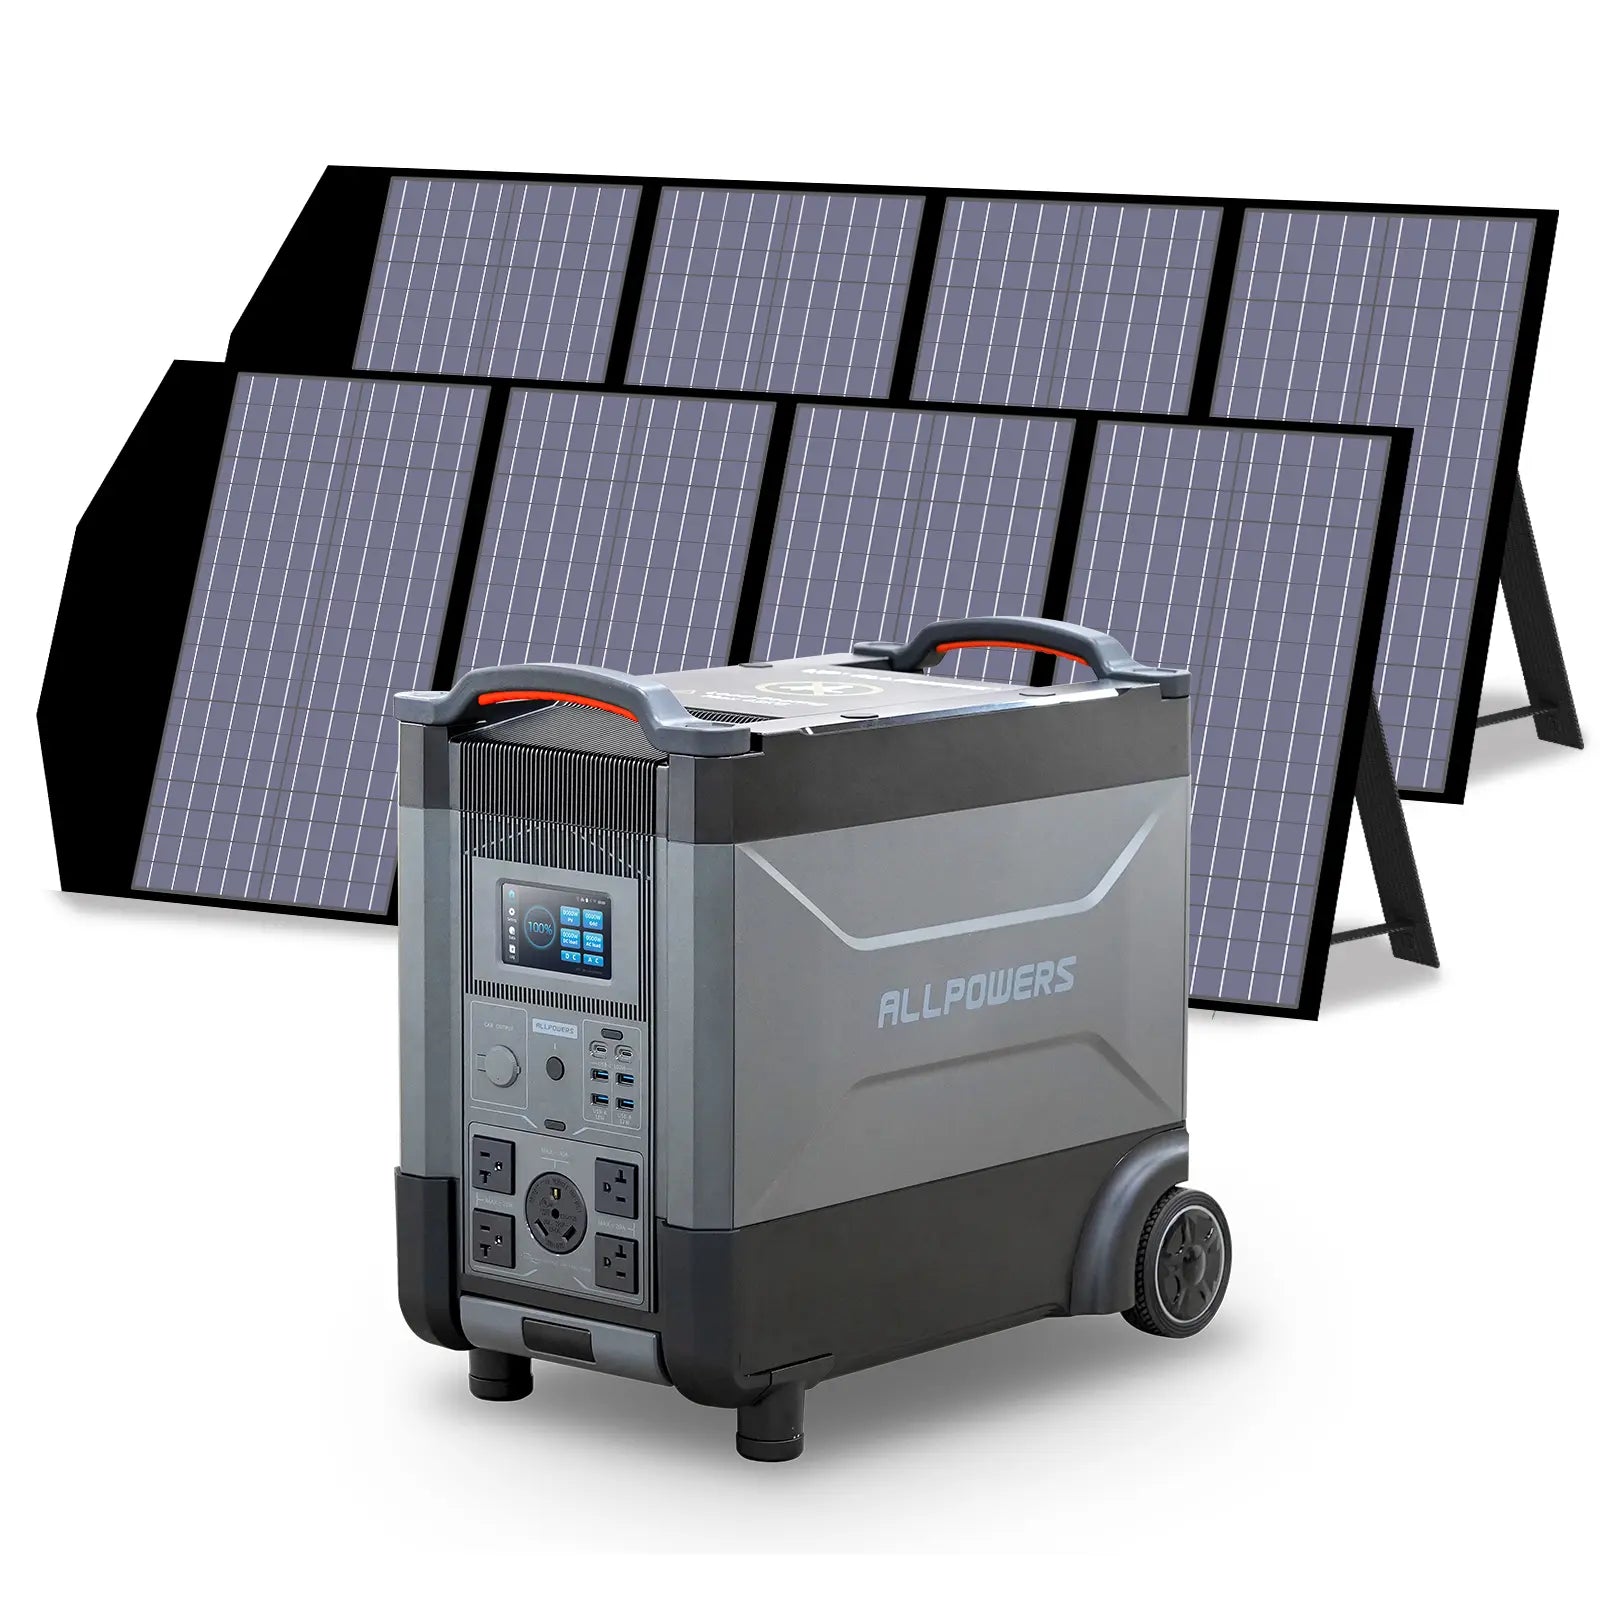 ALLPOWERS Solar Generator Kit 4000W (R4000 + 2 x SP029 140W Solar Panel)